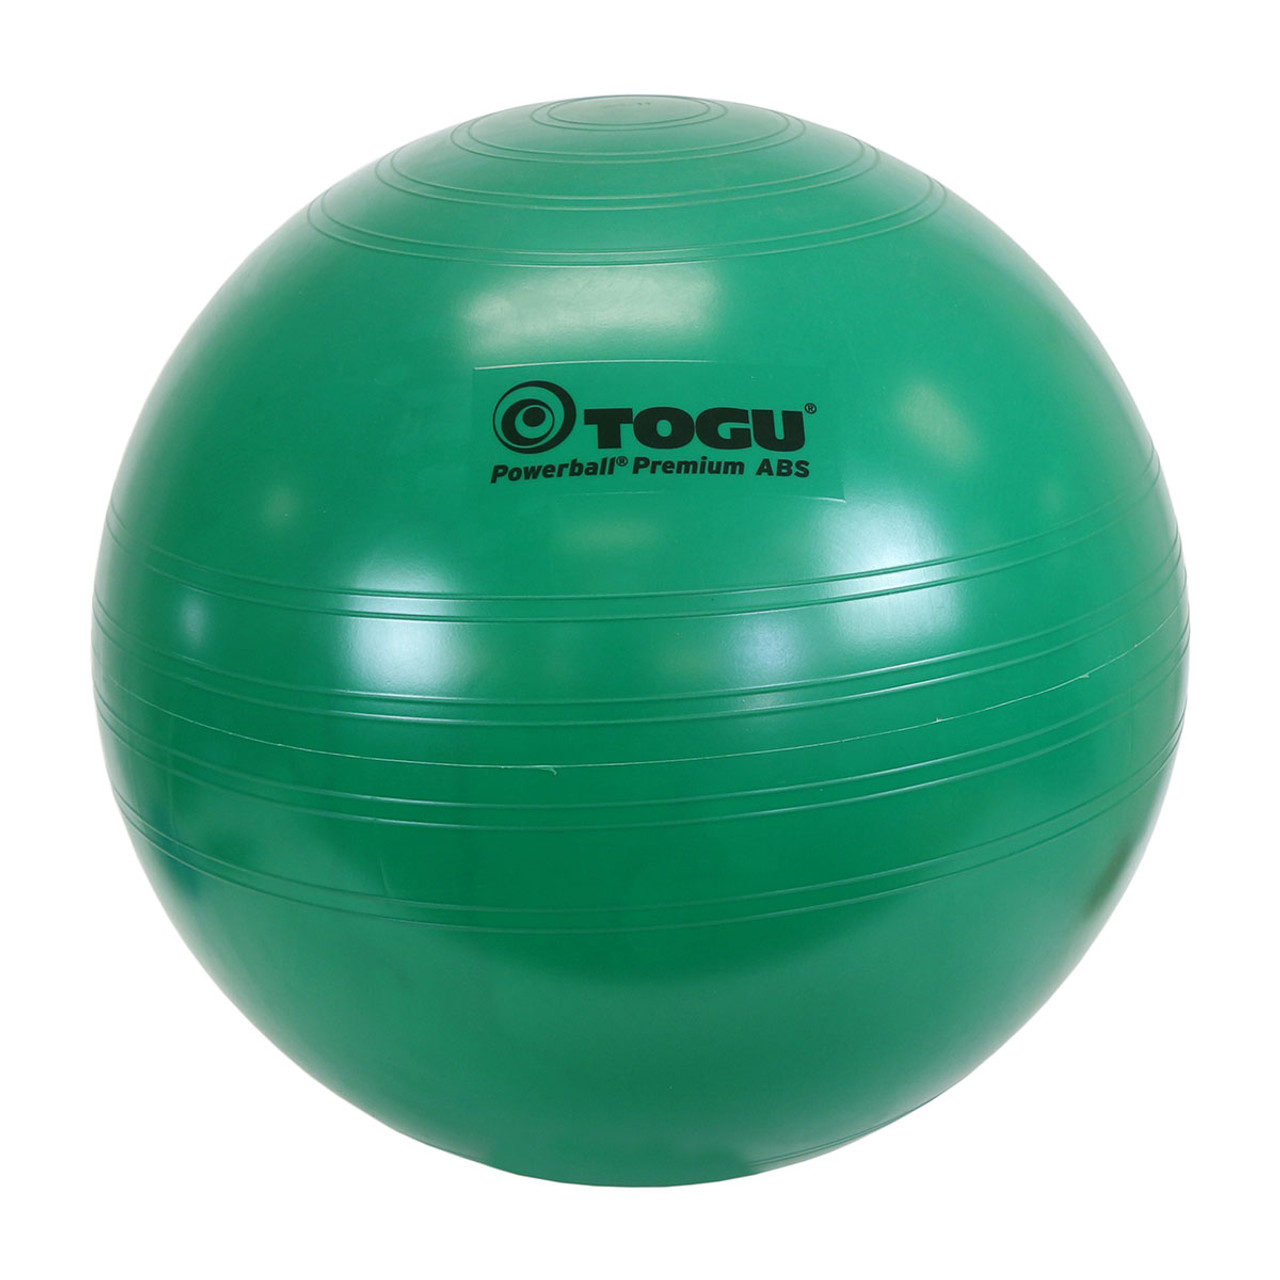 TOGU¨ Powerball¨ Premium ABS¨, 65 cm (26 in), green